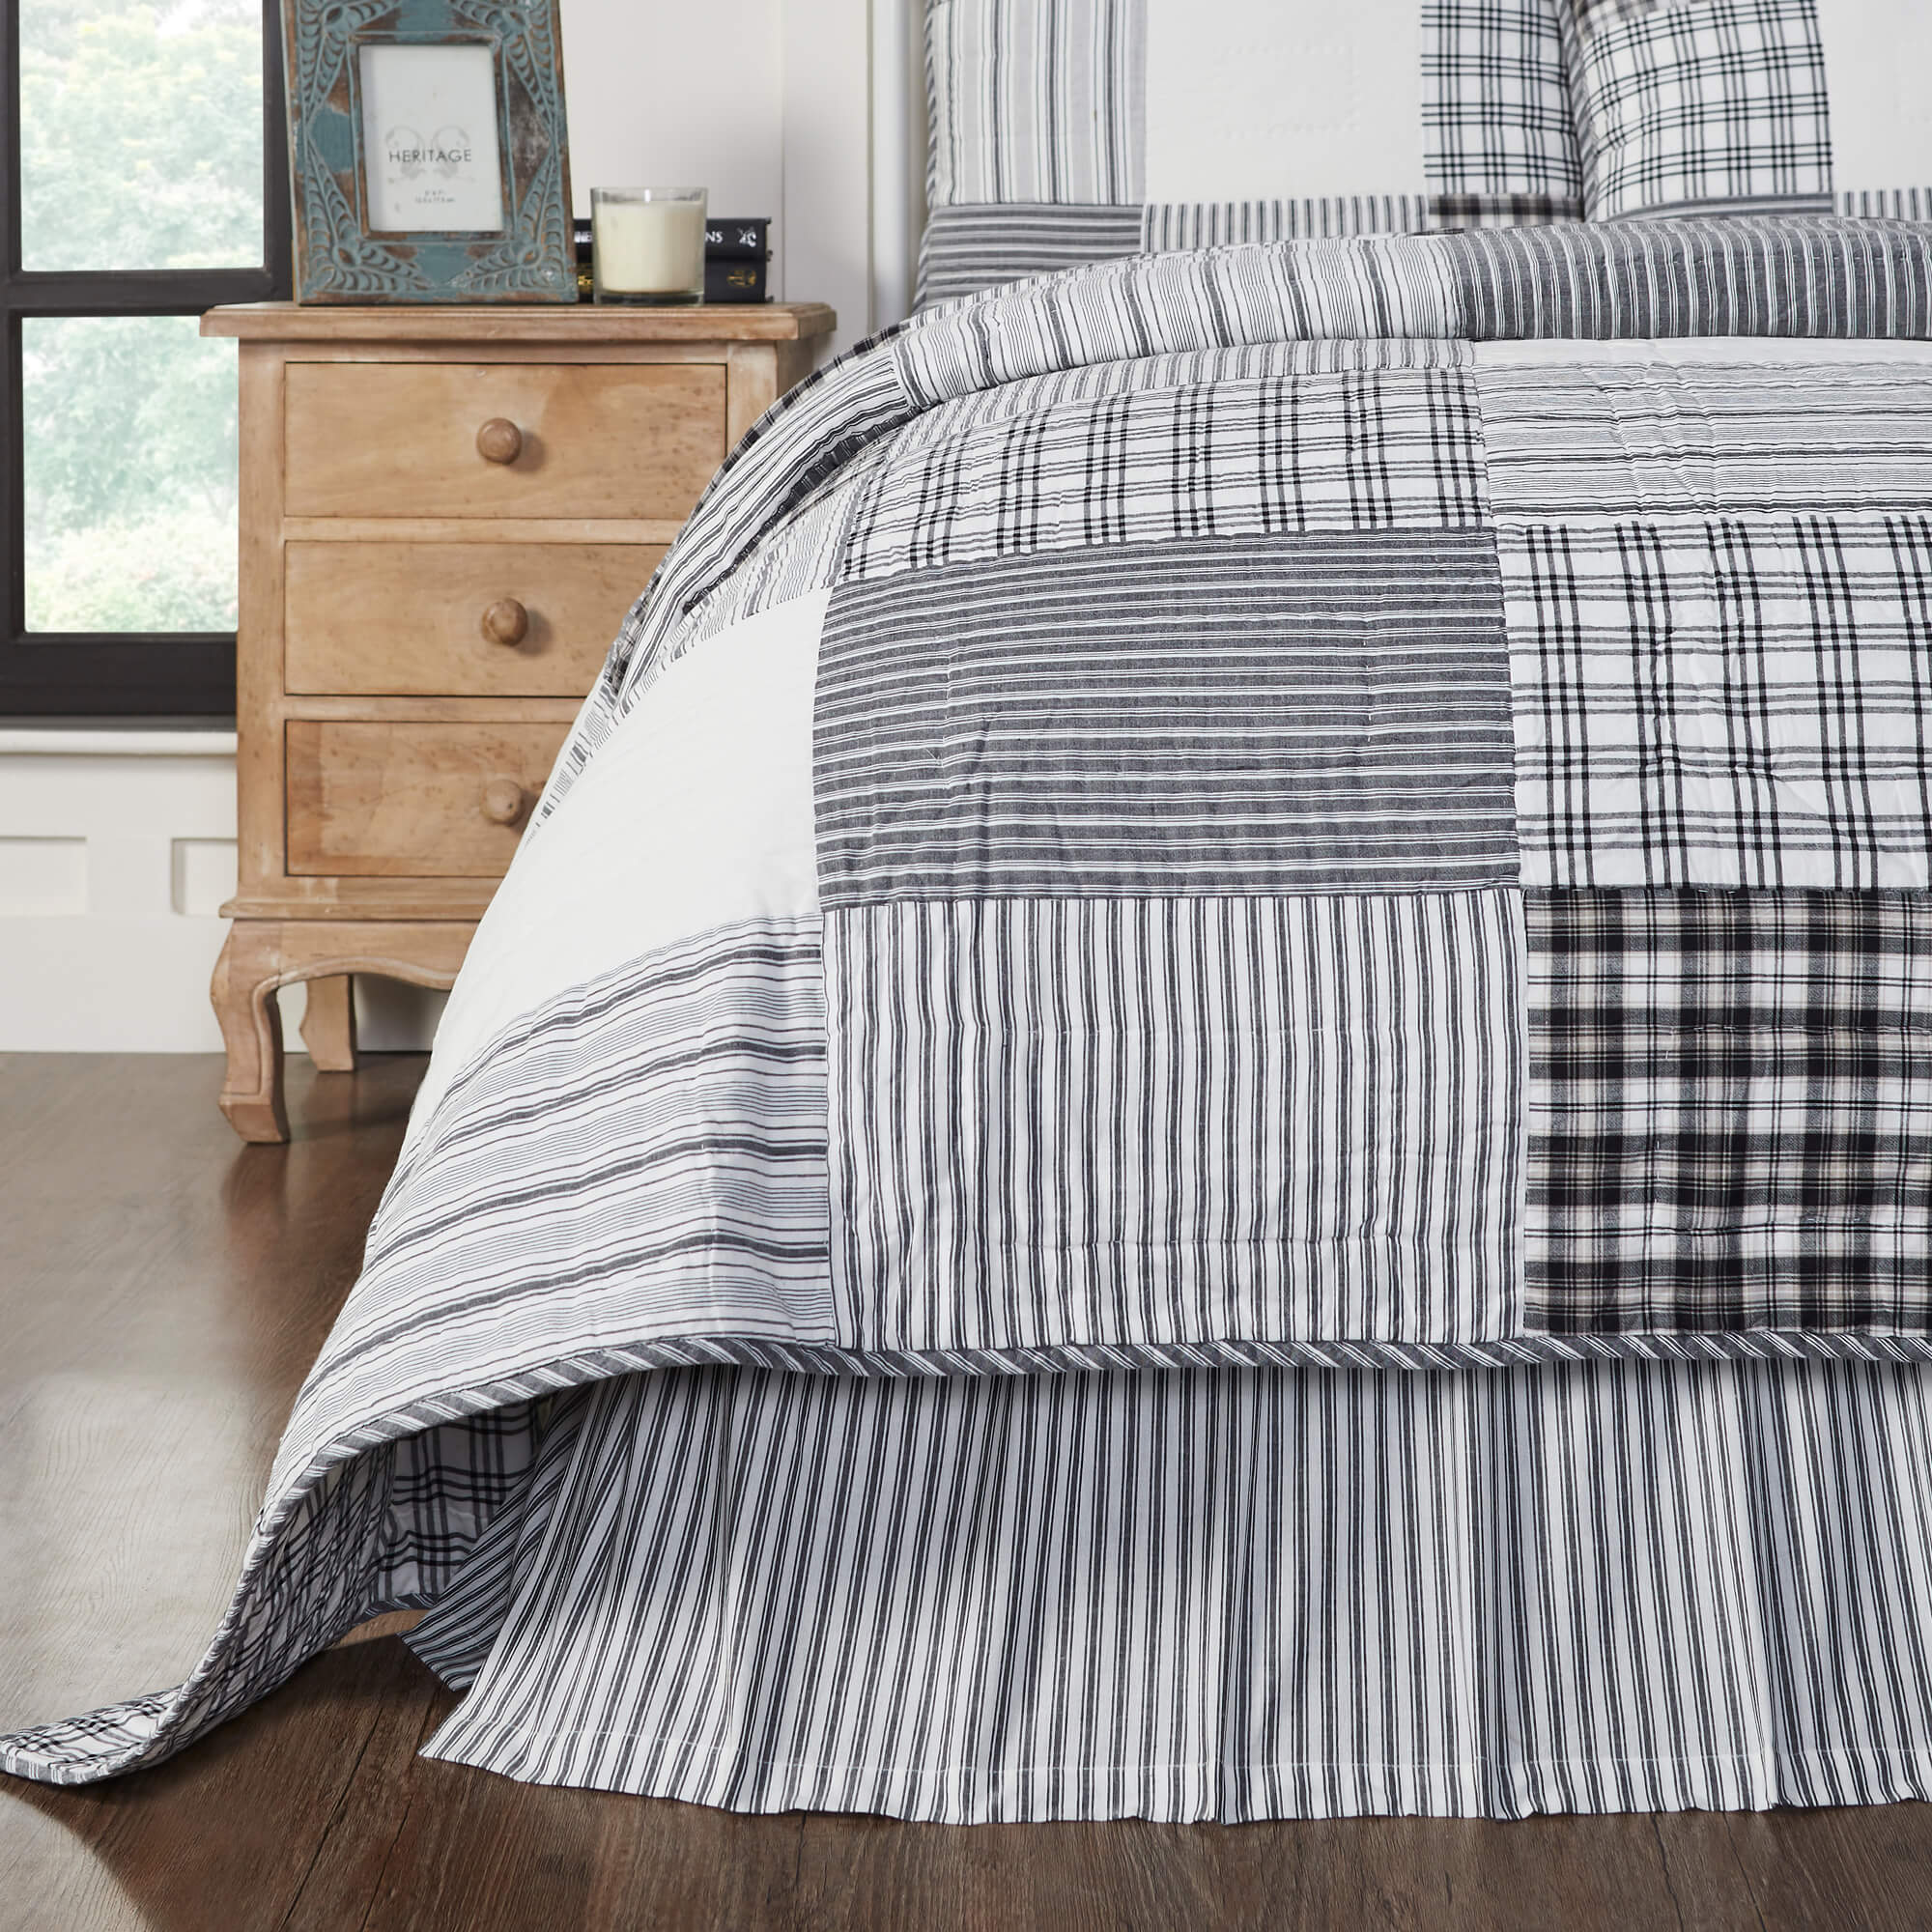 Sawyer Mill Charcoal Ticking Stripe Queen Bed Skirt 60x80x16 